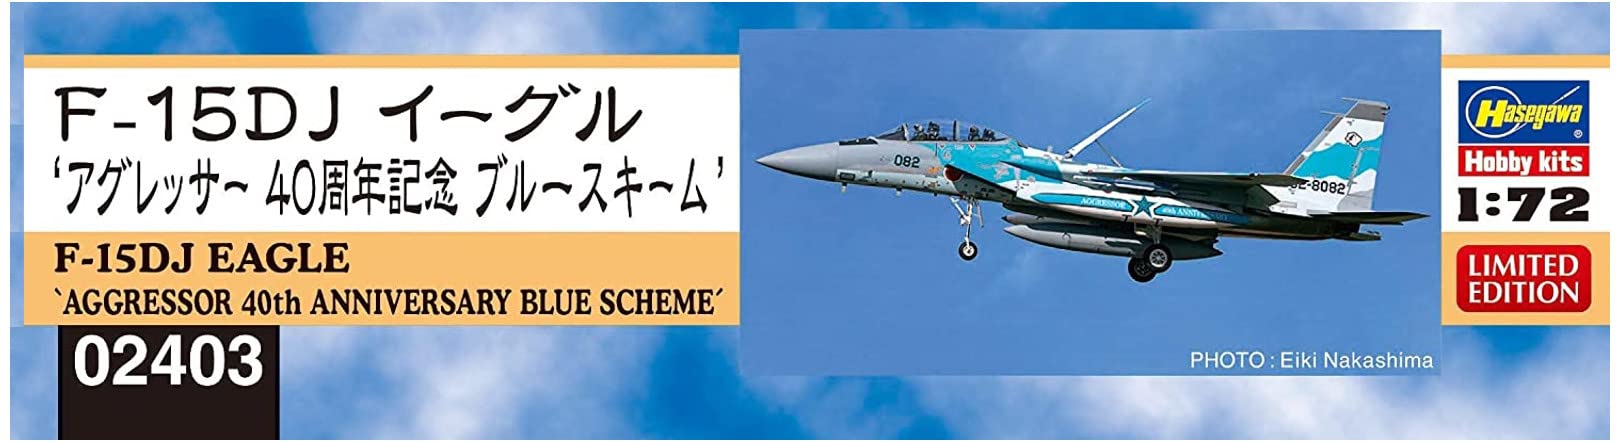 HASEGAWA 1/72 F-15Dj Eagle Aggressor 40Th Anniversary Blue Scheme Plastic Model